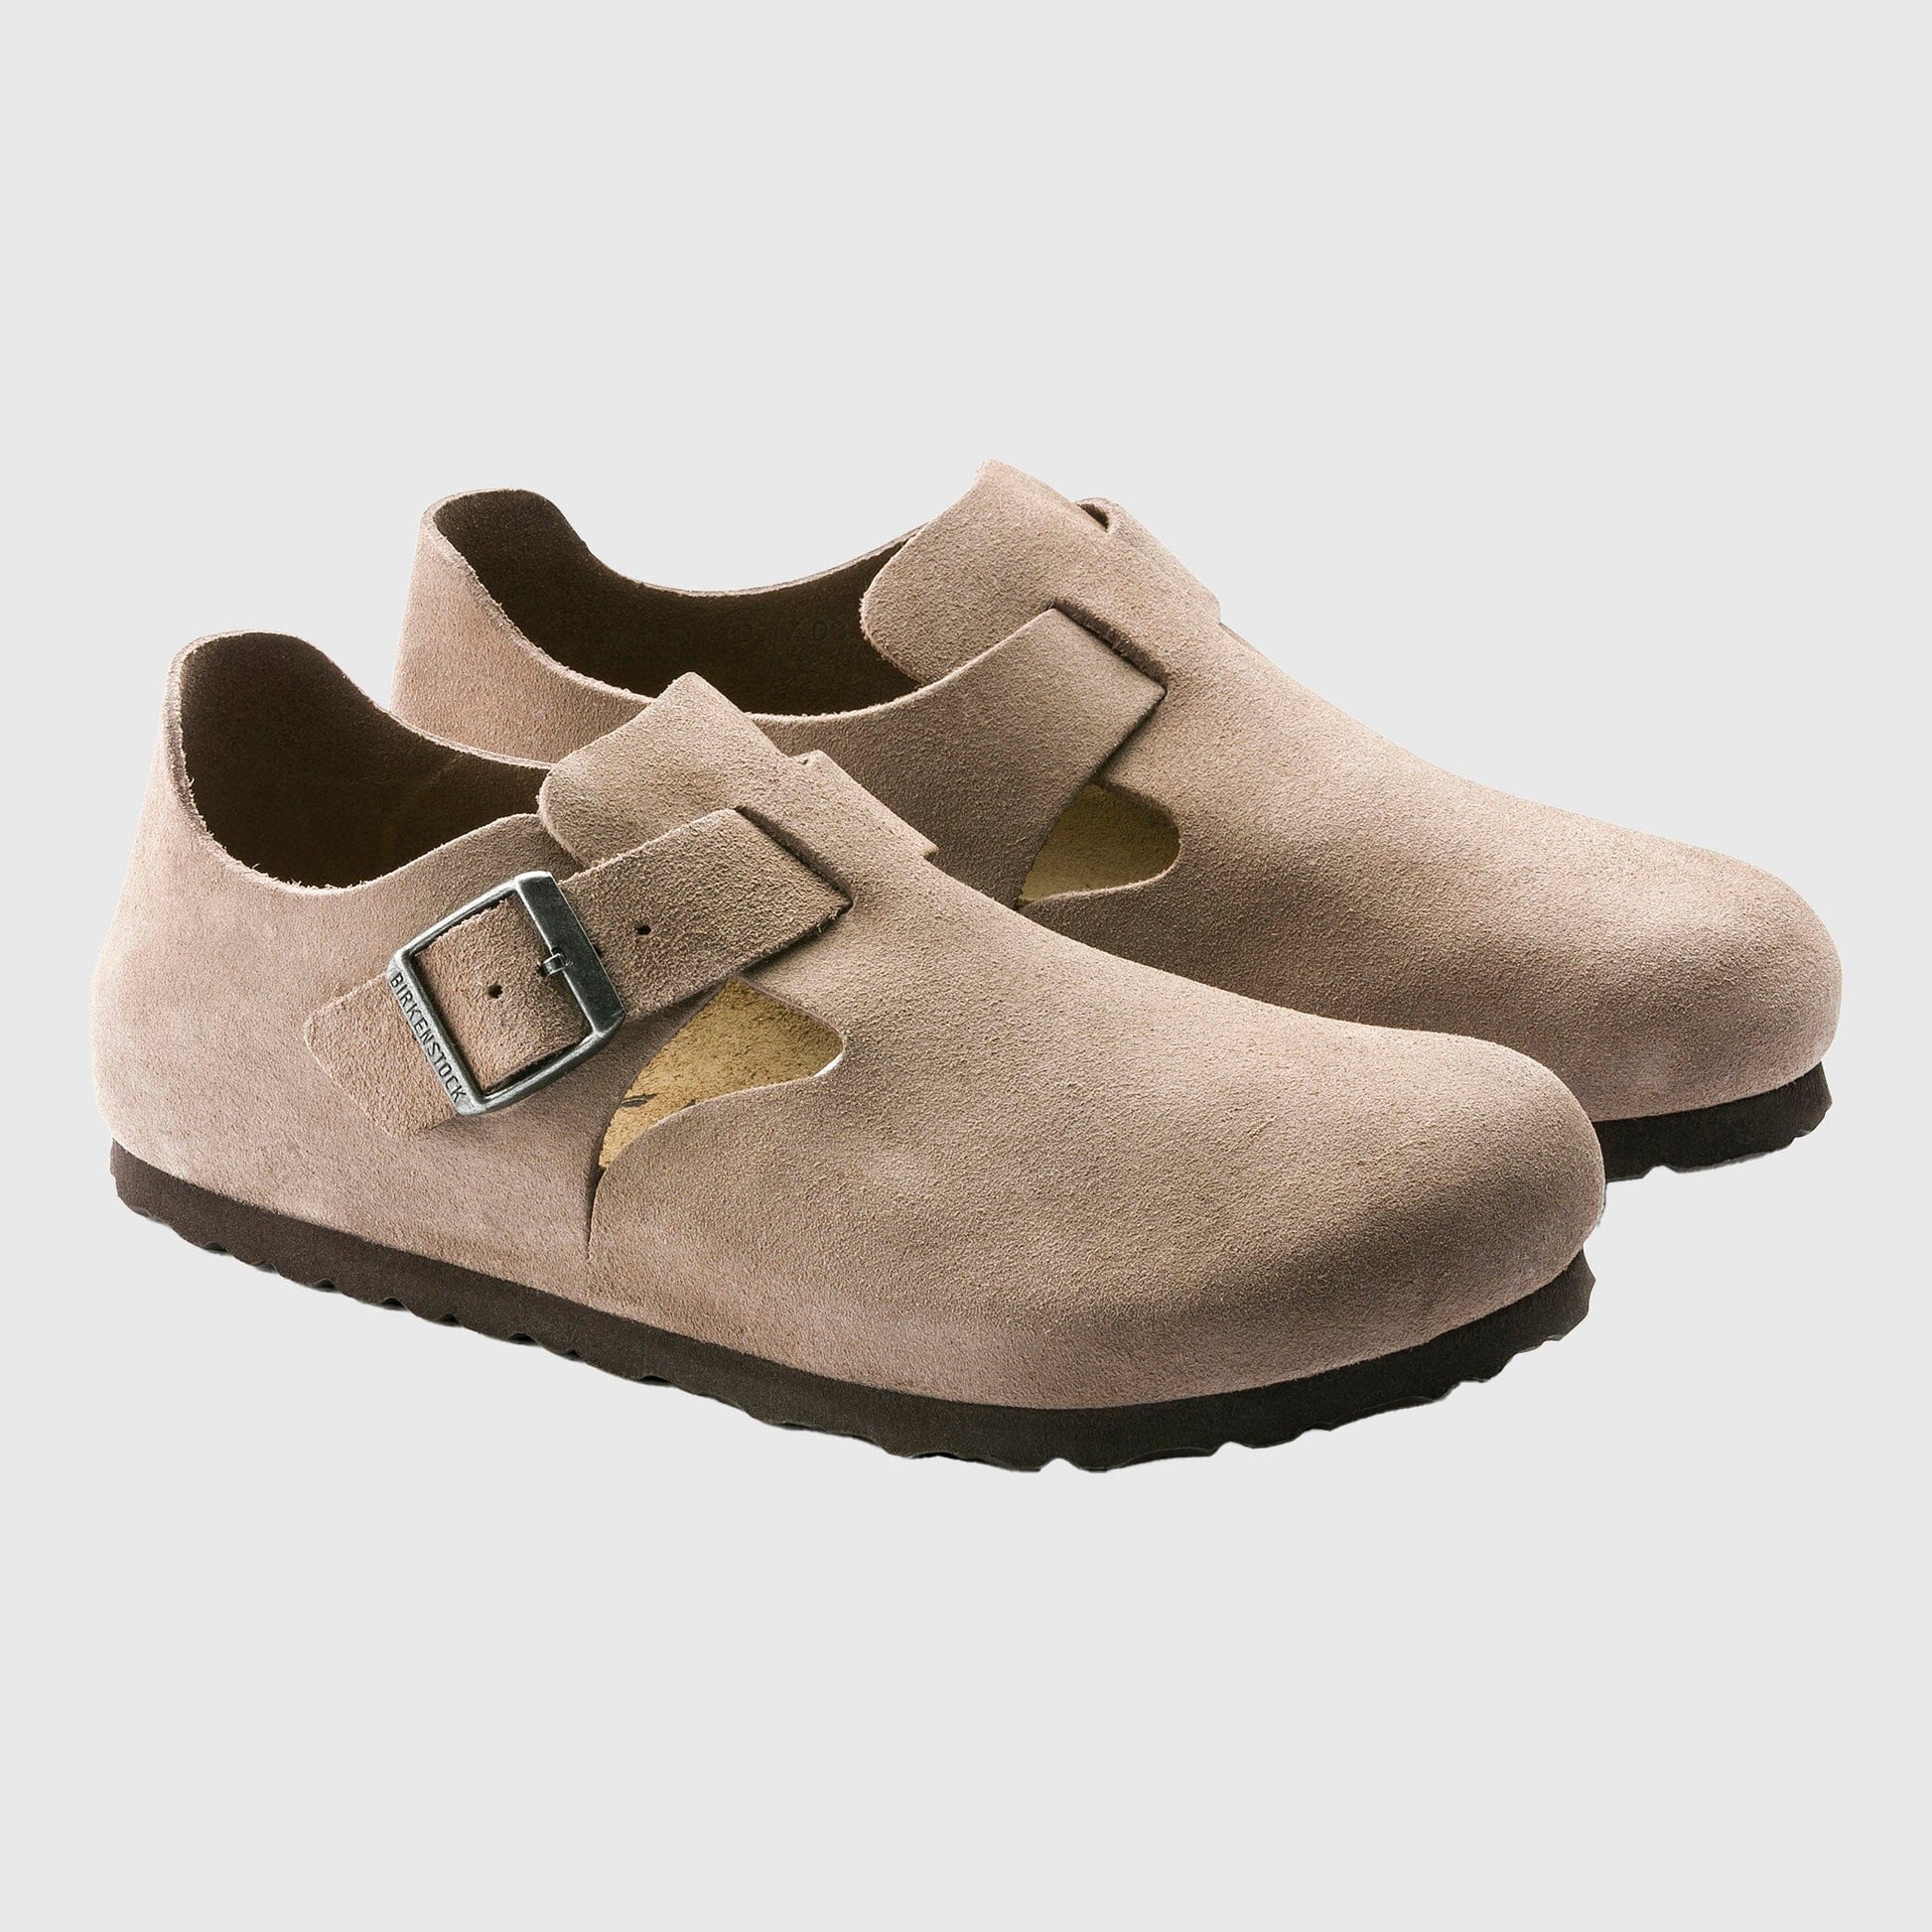 Birkenstock London Shoe Suede - Taupe Shoes Birkenstock 